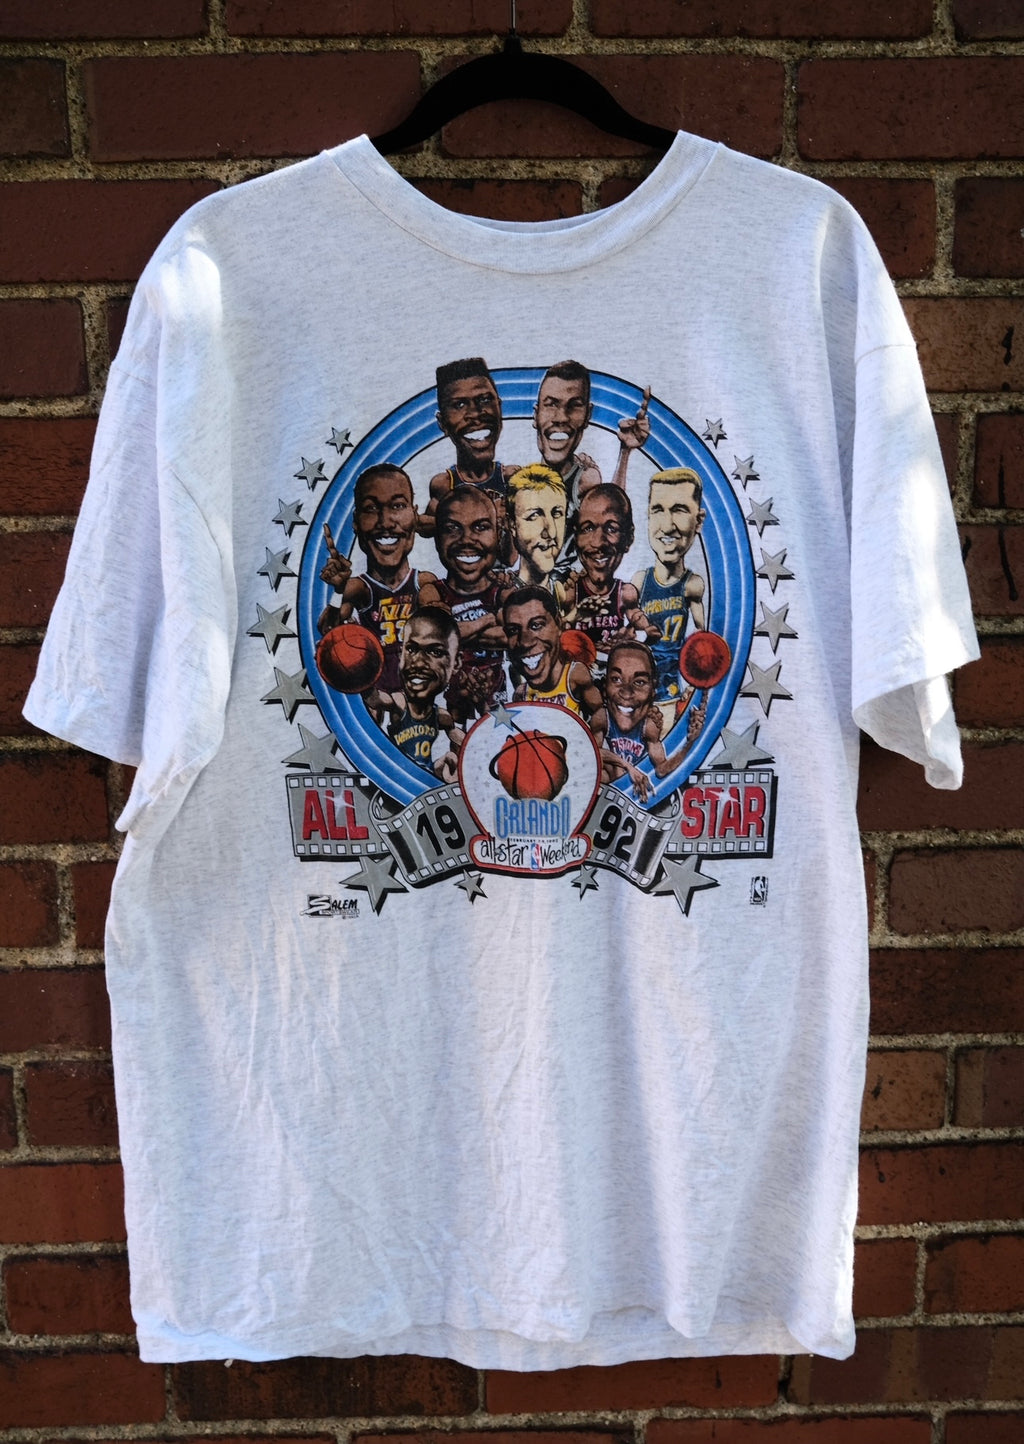 1992 NBA All-Star T-Shirt